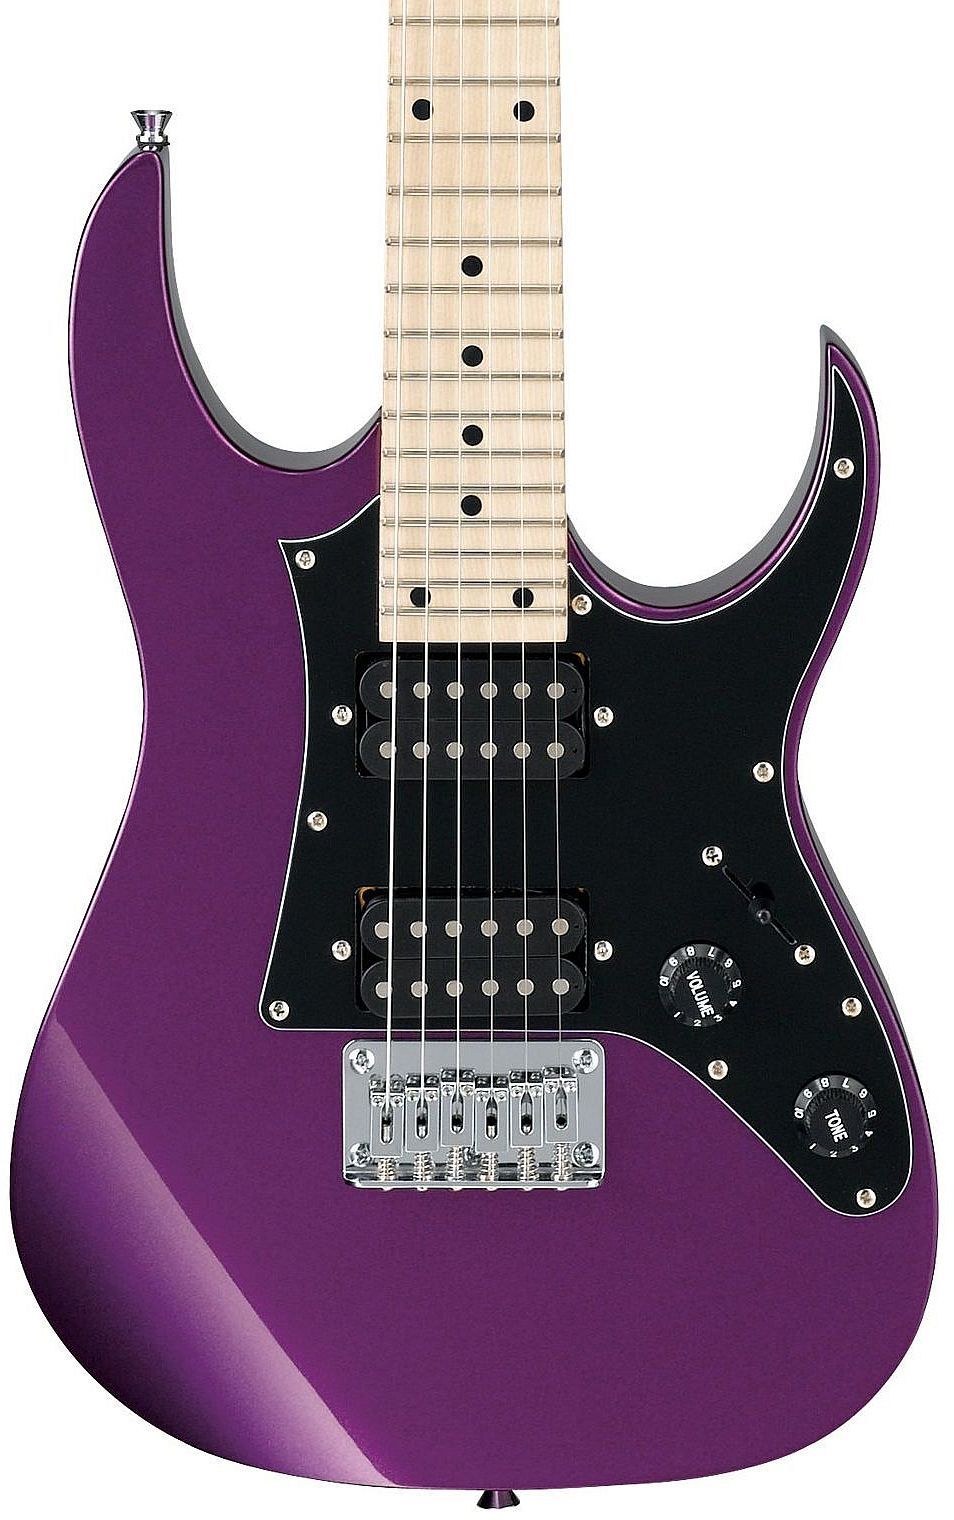 Ibanez miKro GRGM21M Electric Guitar - Metallic Purple Color